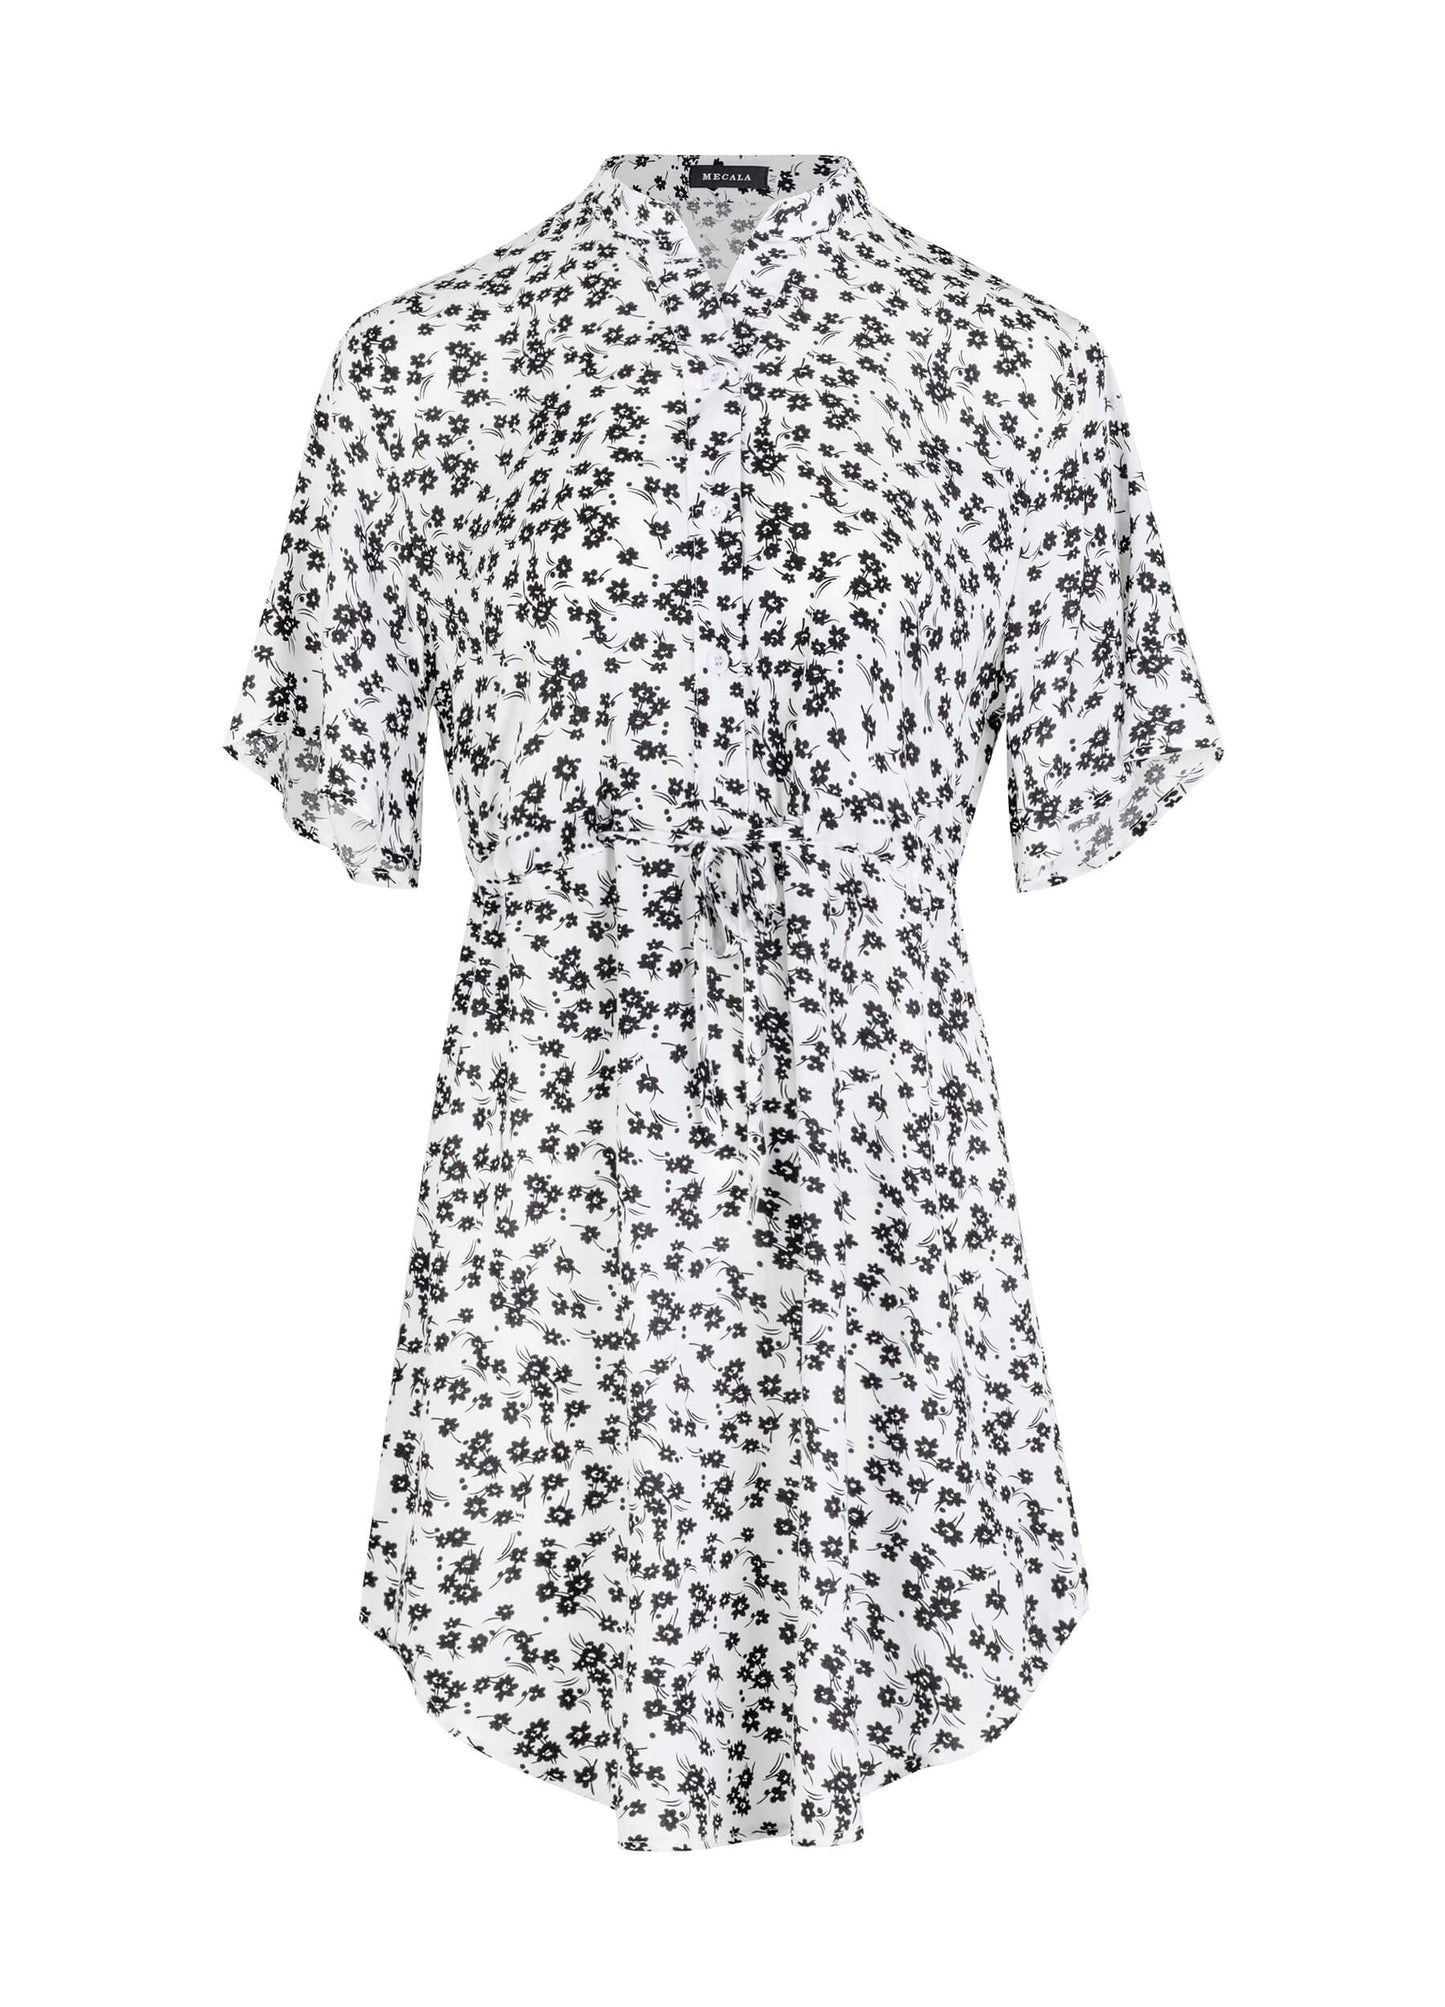 MECALA Women's Summer Floral Print V-Neck Short Sleeve Short Dress-White